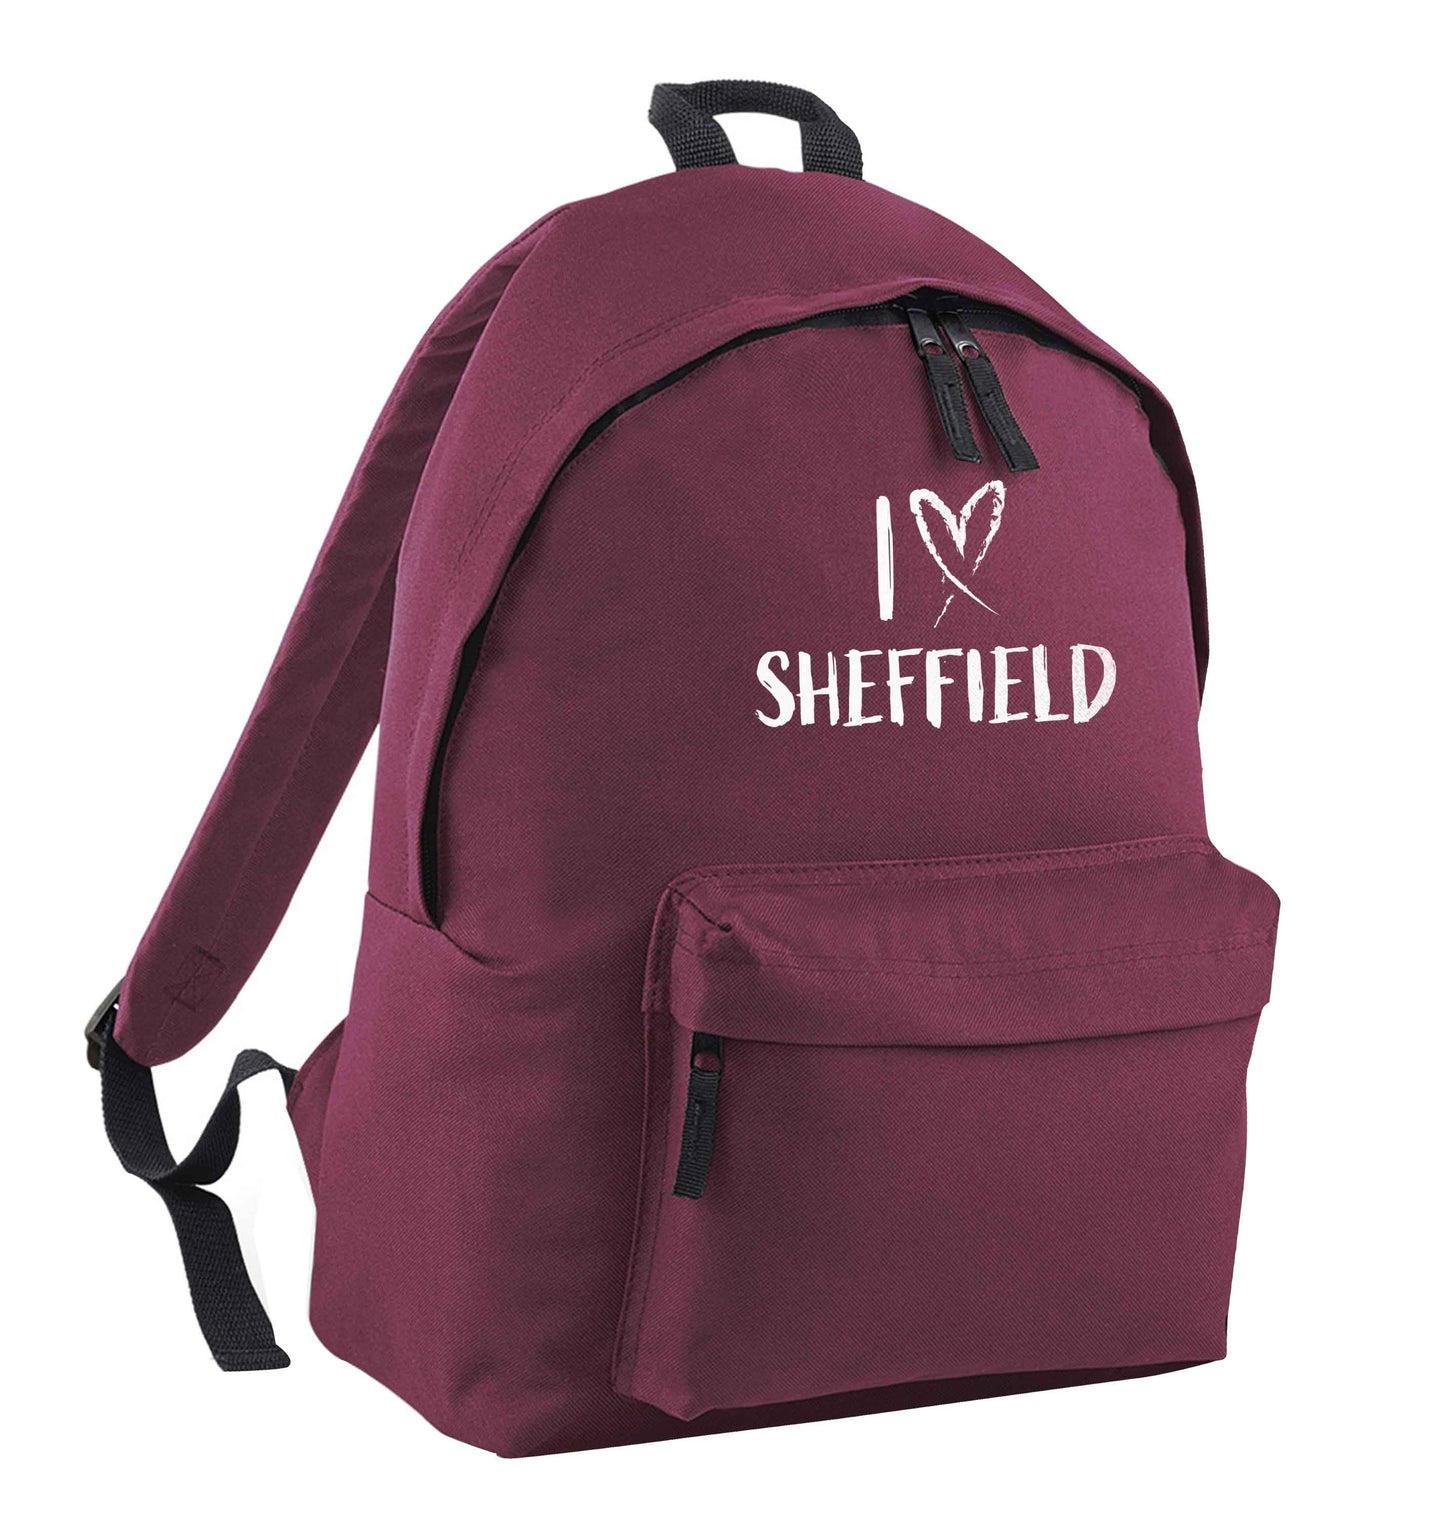 I love Sheffield maroon children's backpack